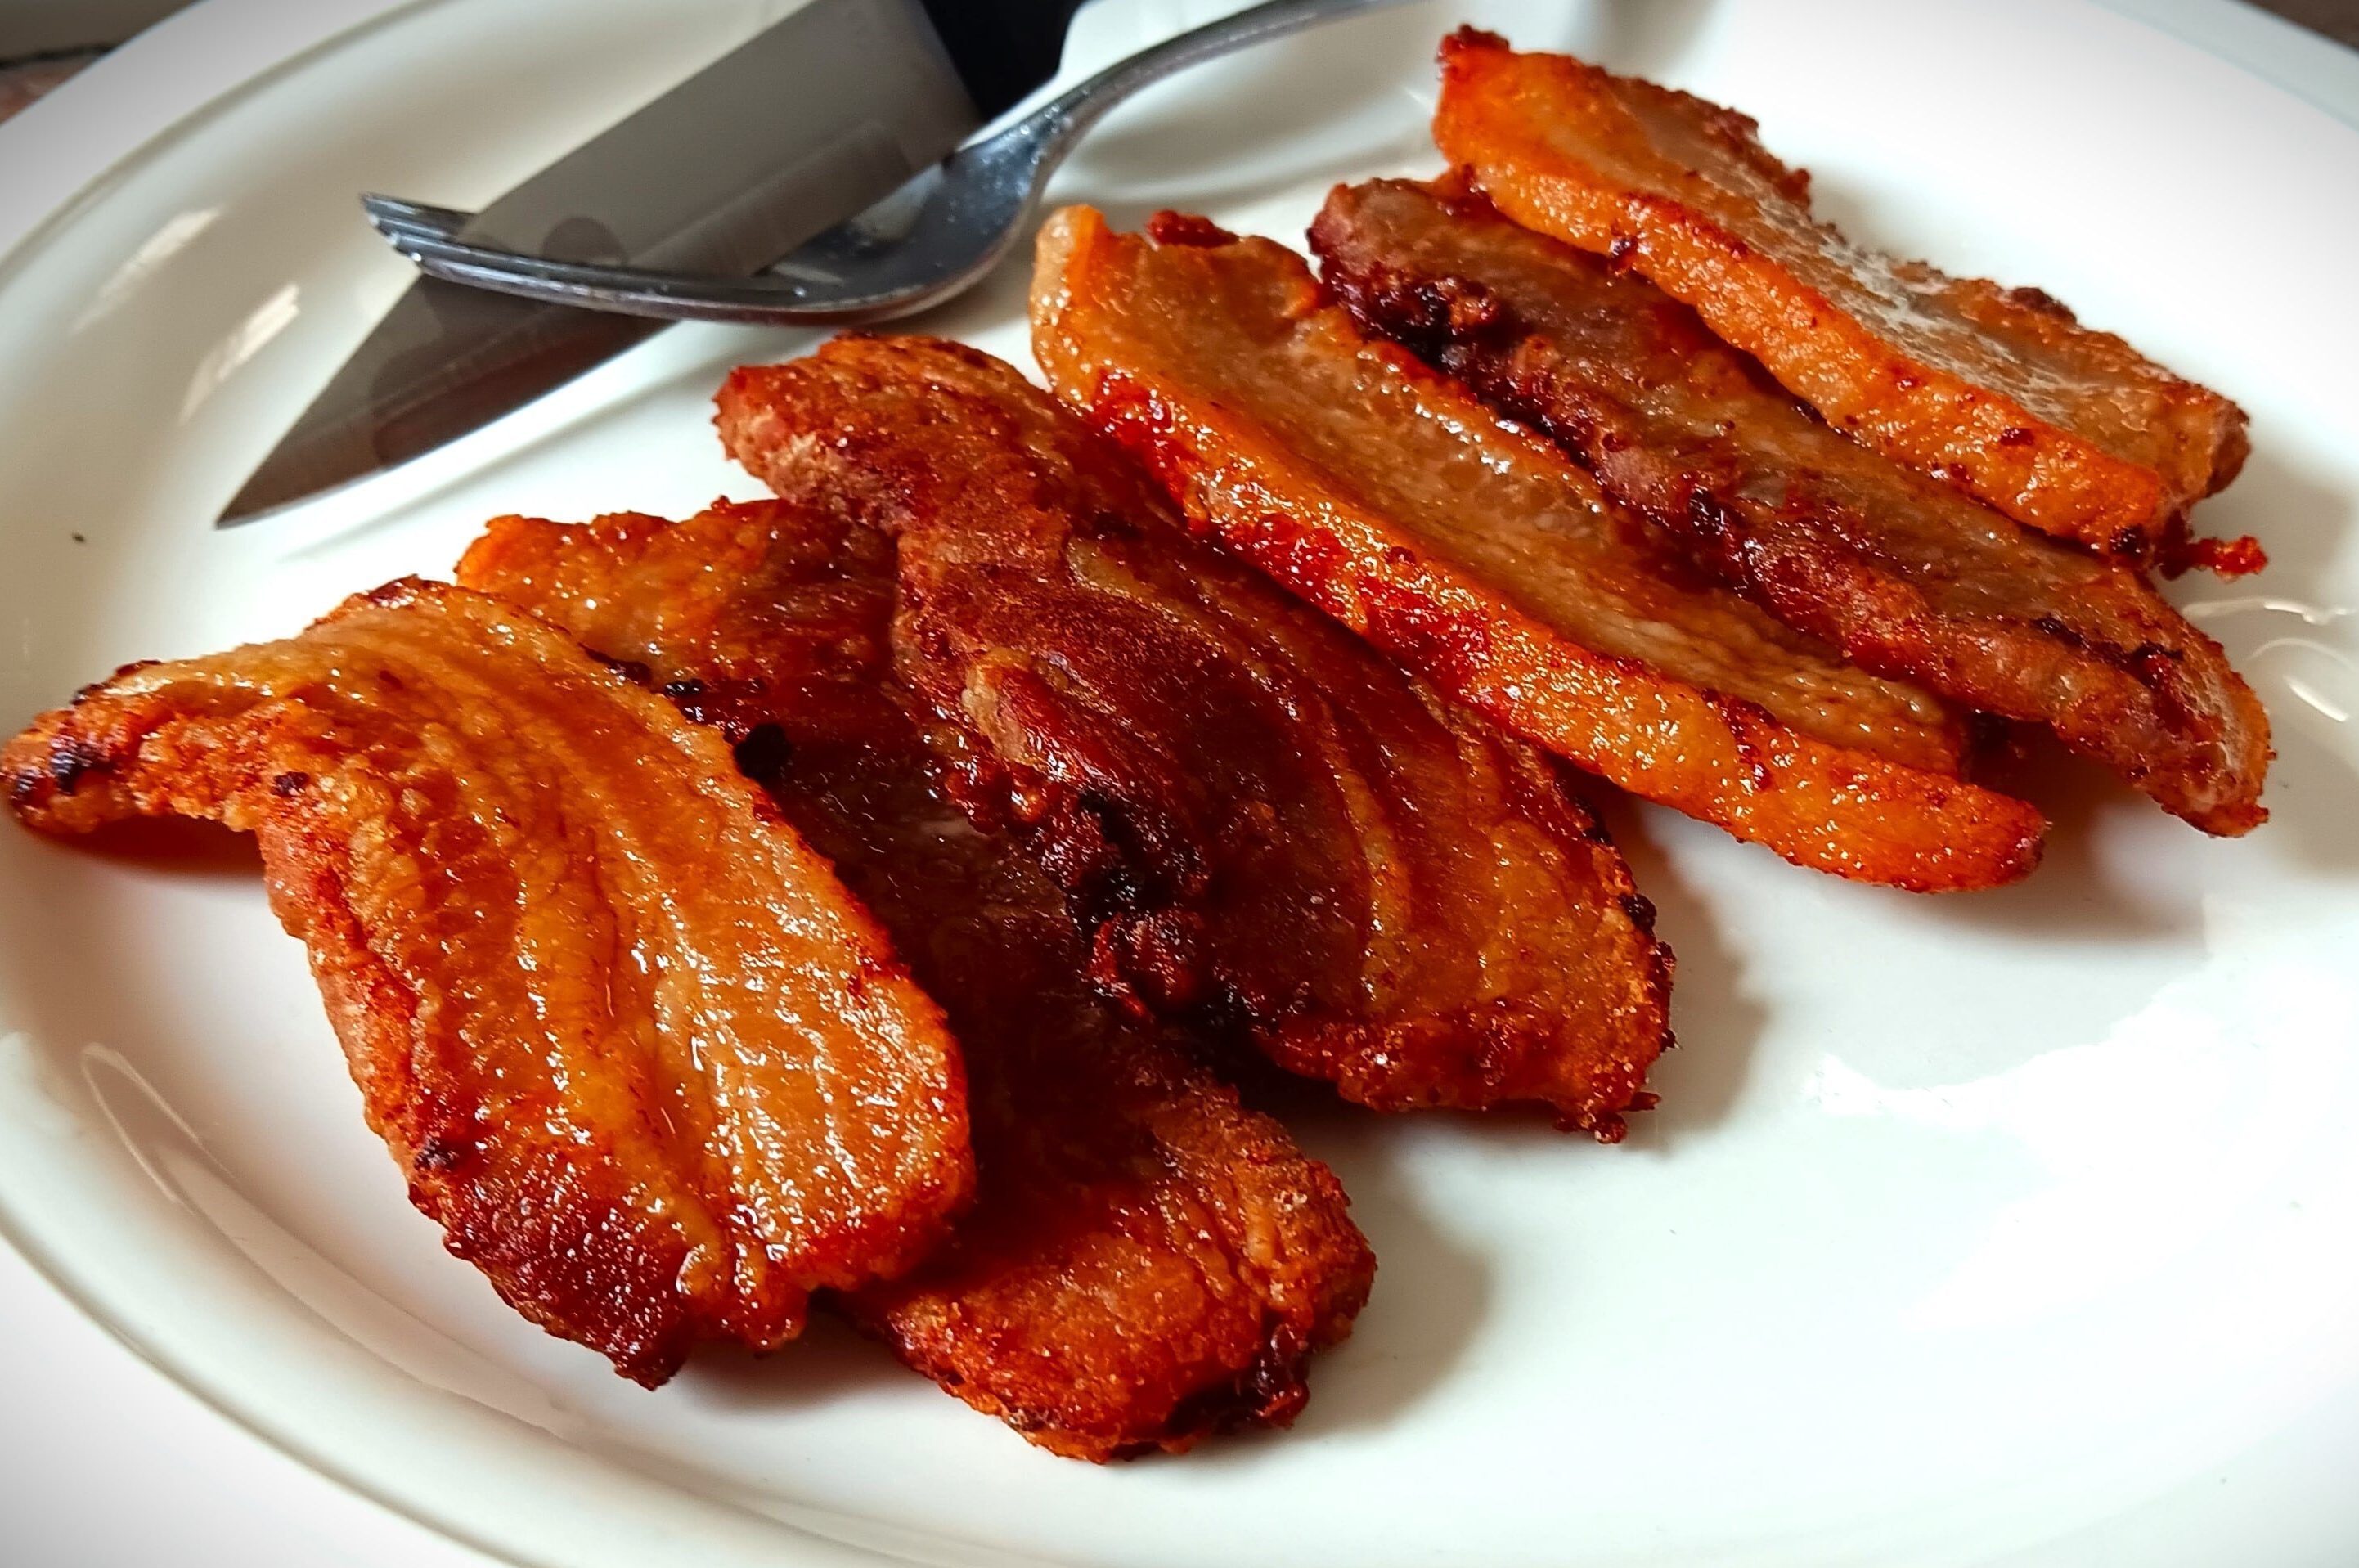 fried pork belly slices / photo by Nicole Adams